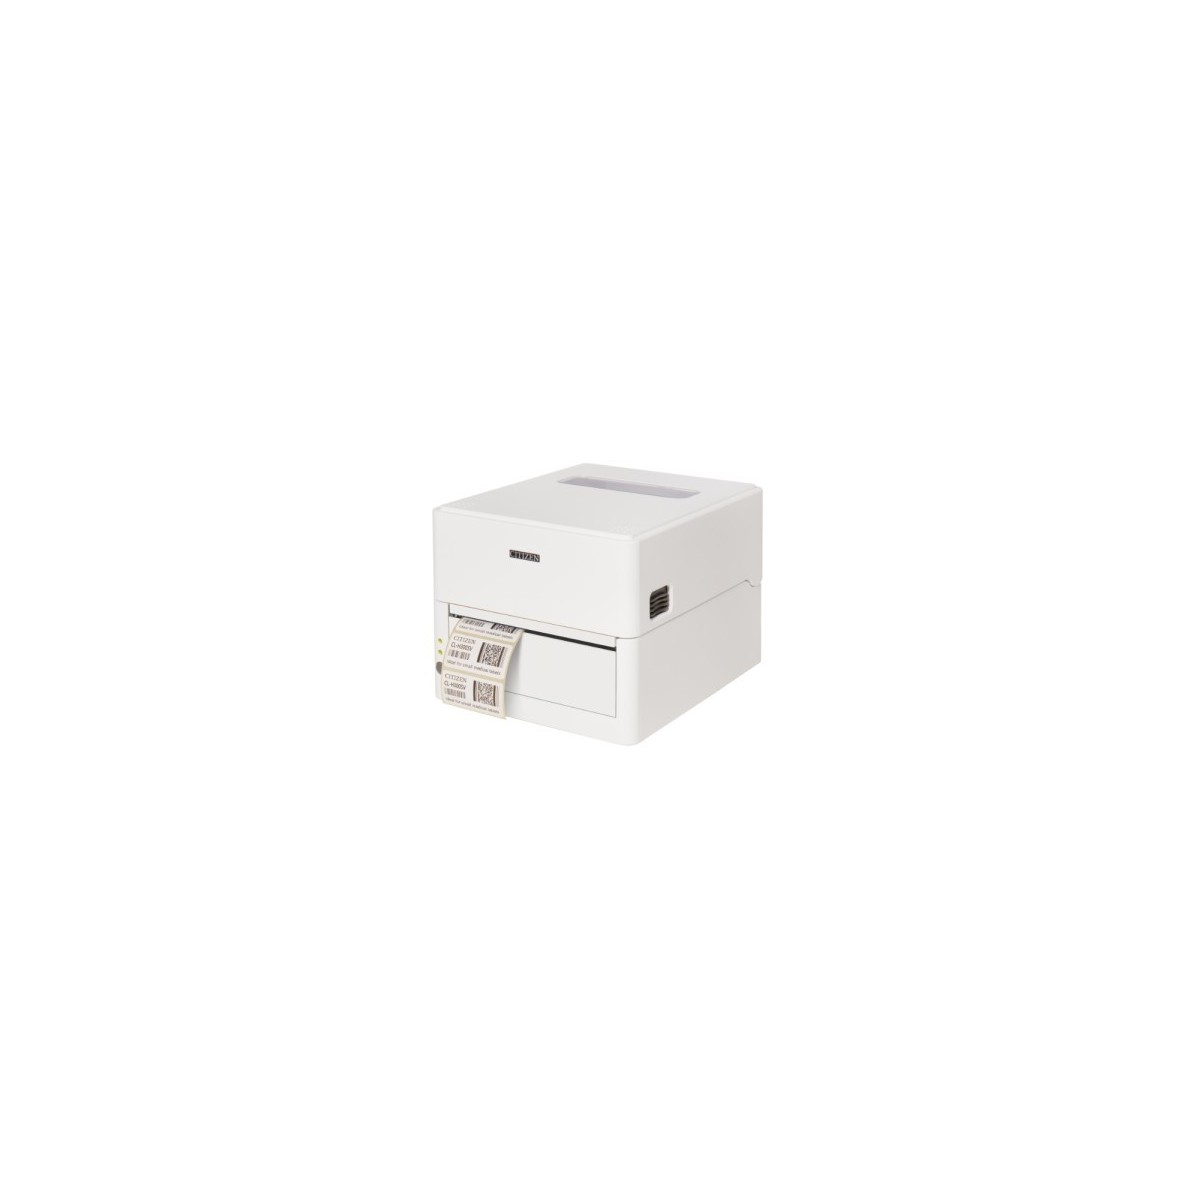 Citizen CL-H300SV Printer_ Silver Ion USB White EN Plug space for Optional